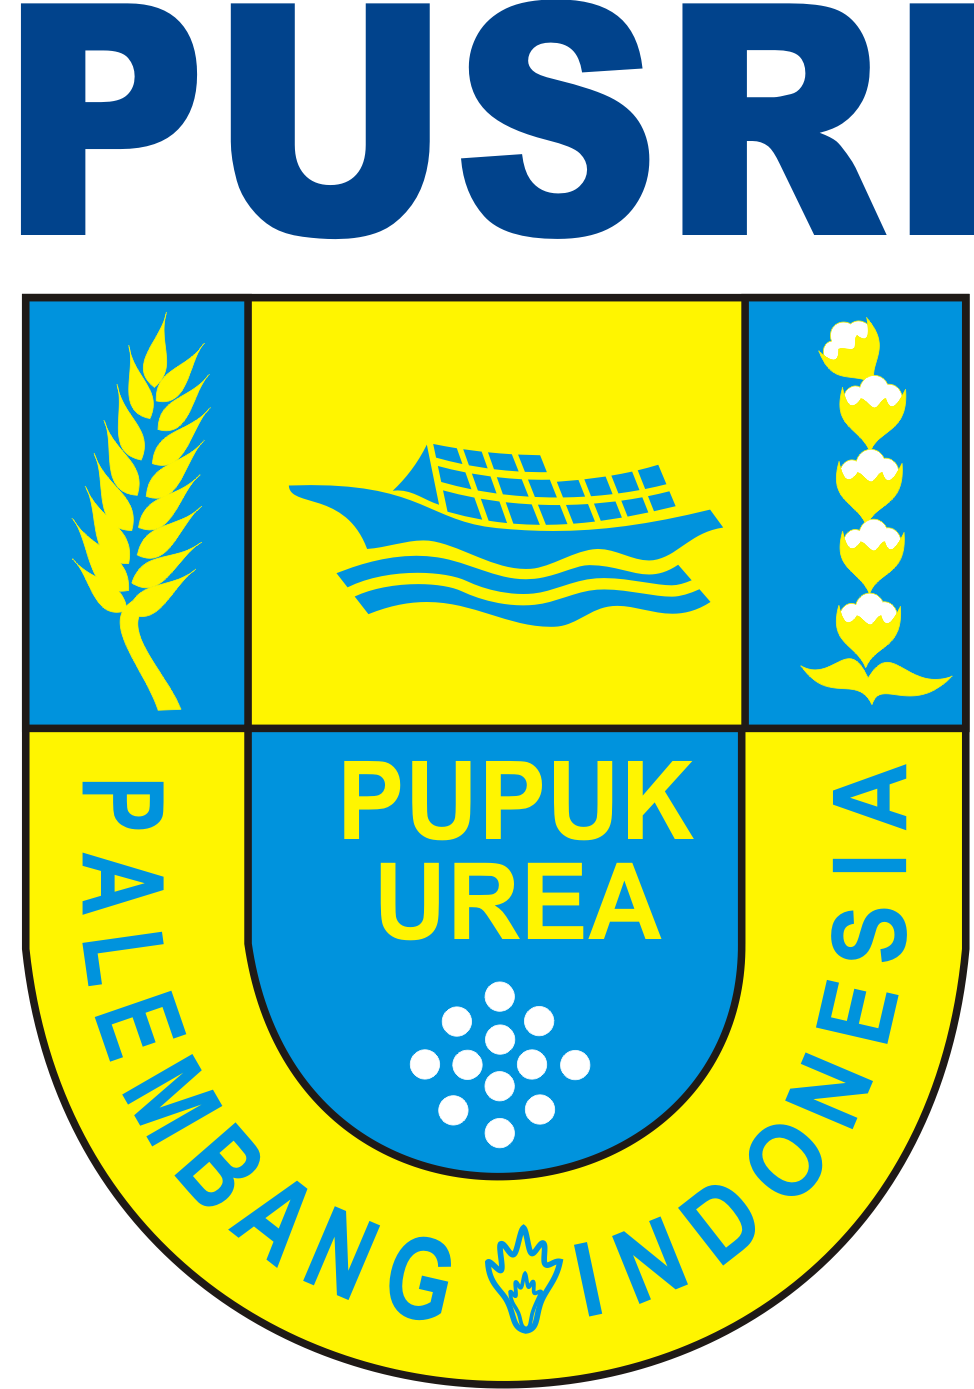 Pusri's logo